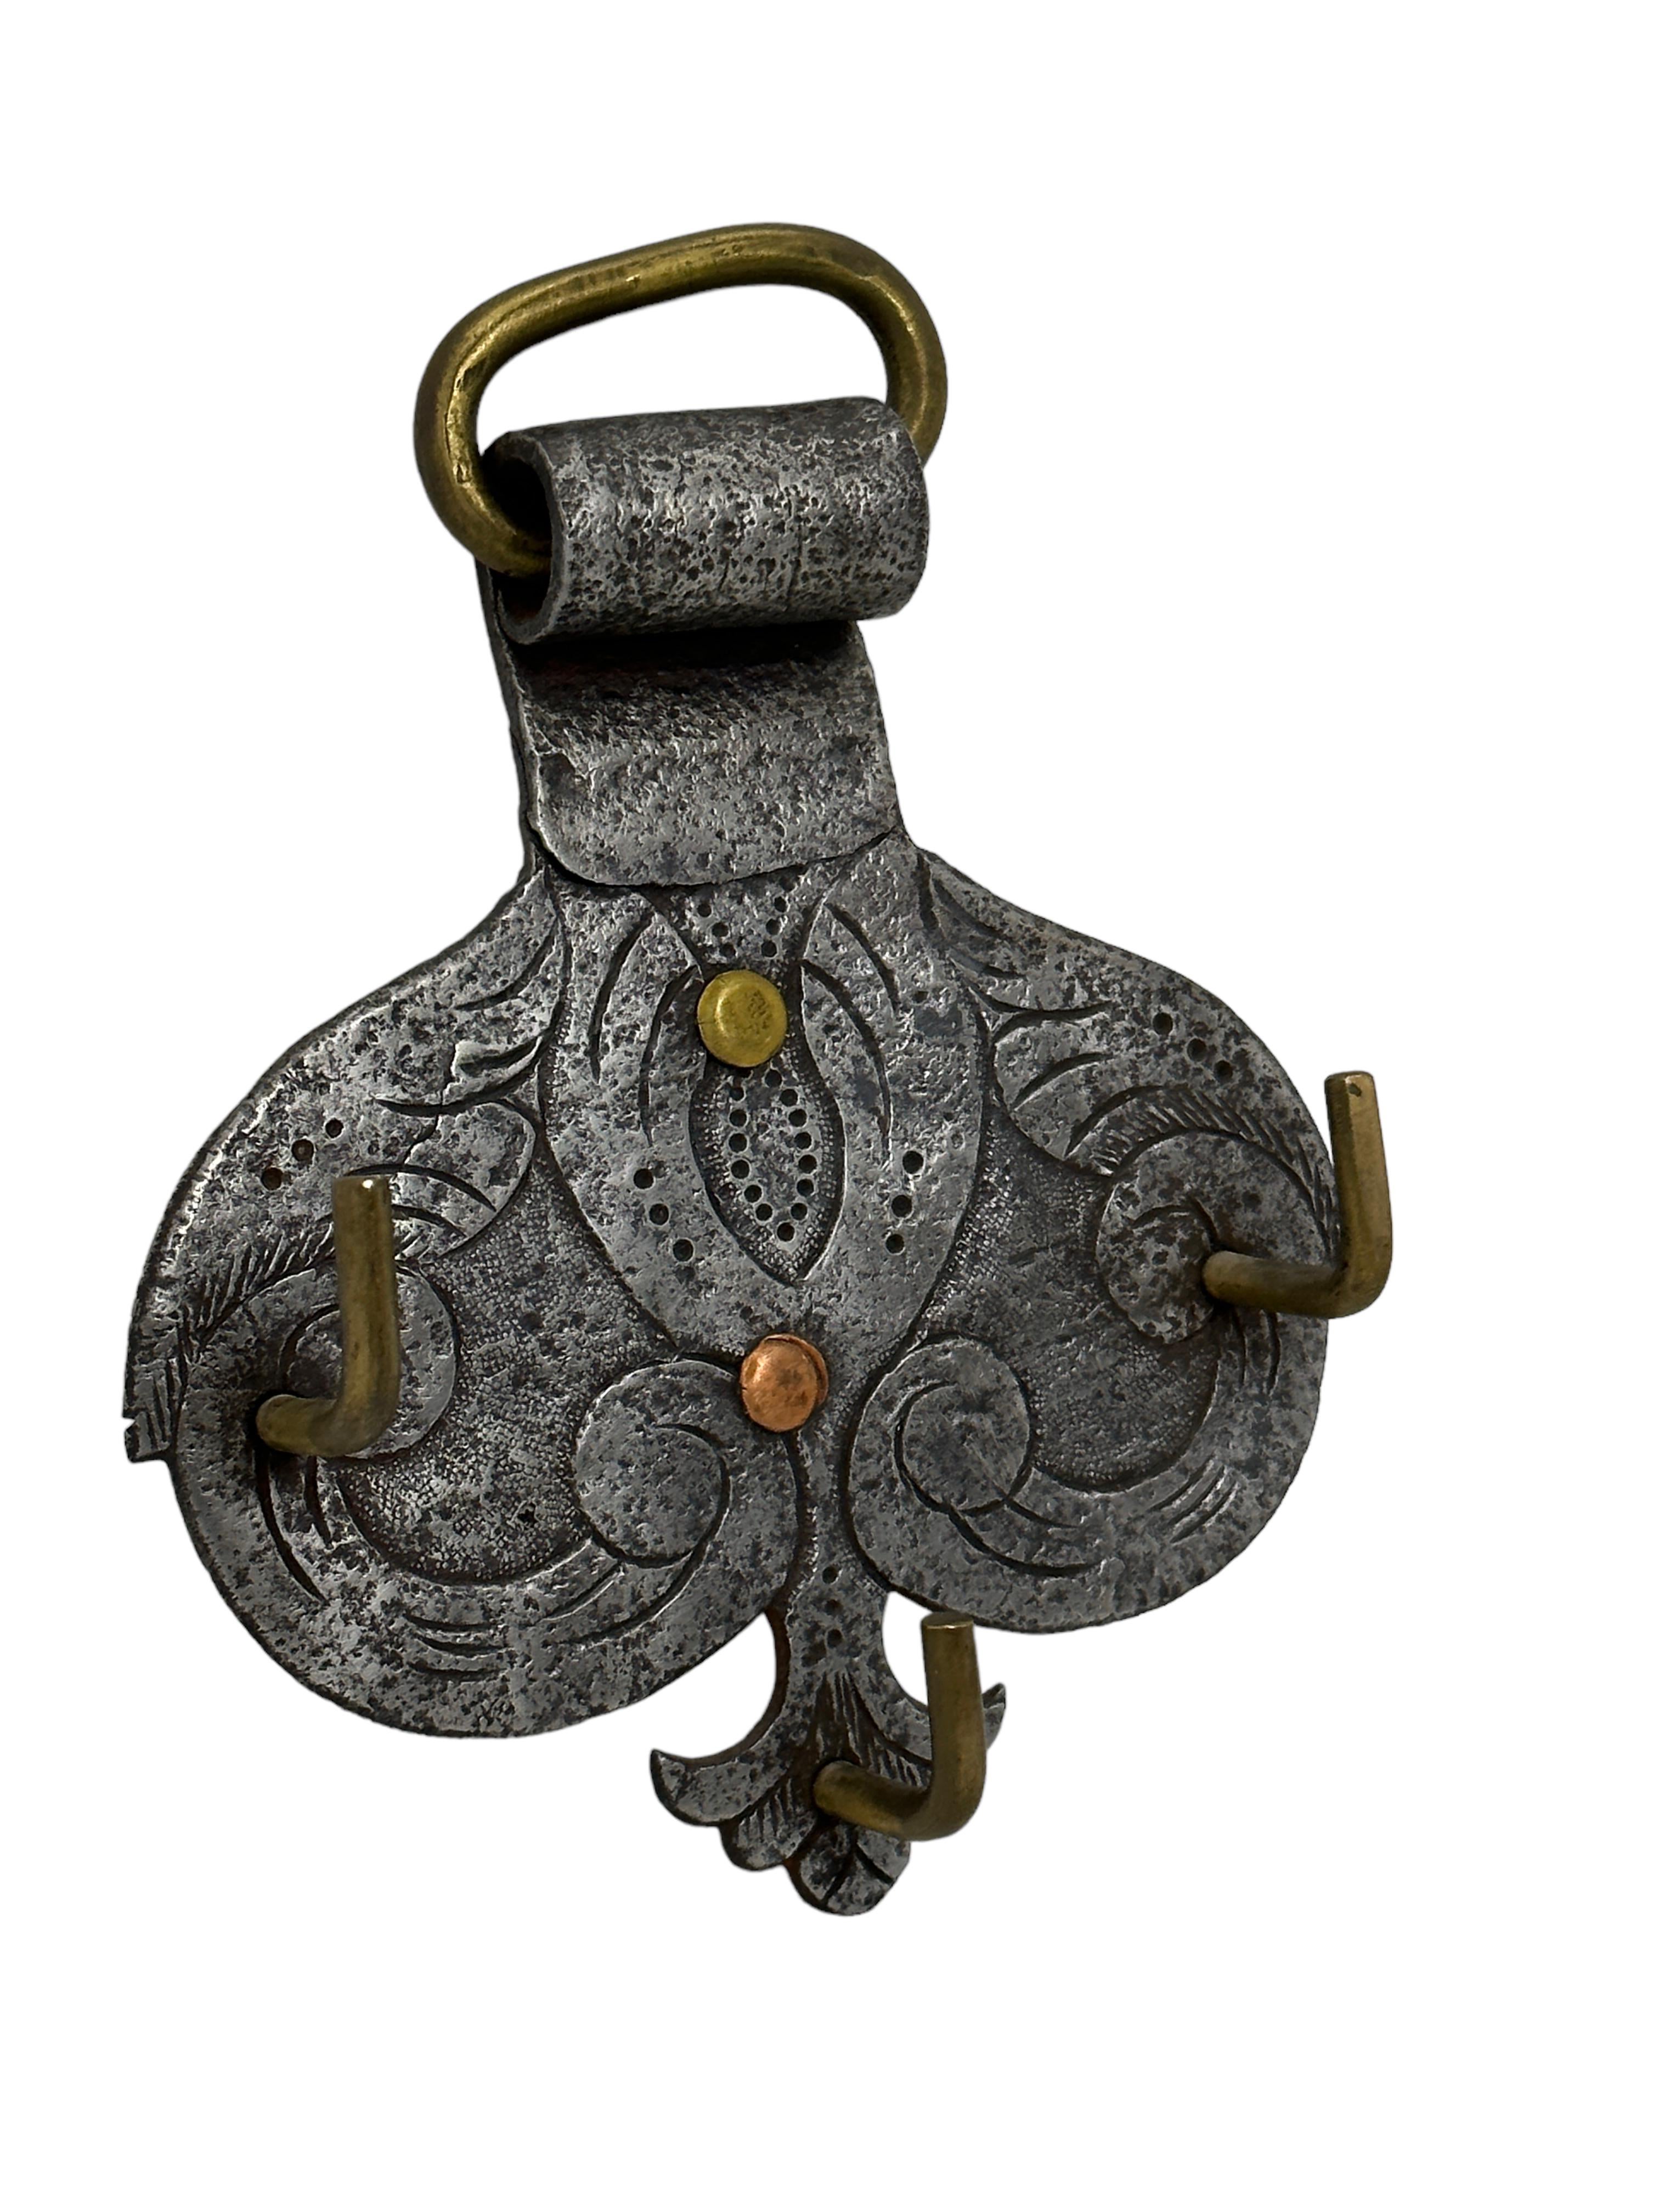 18th century key